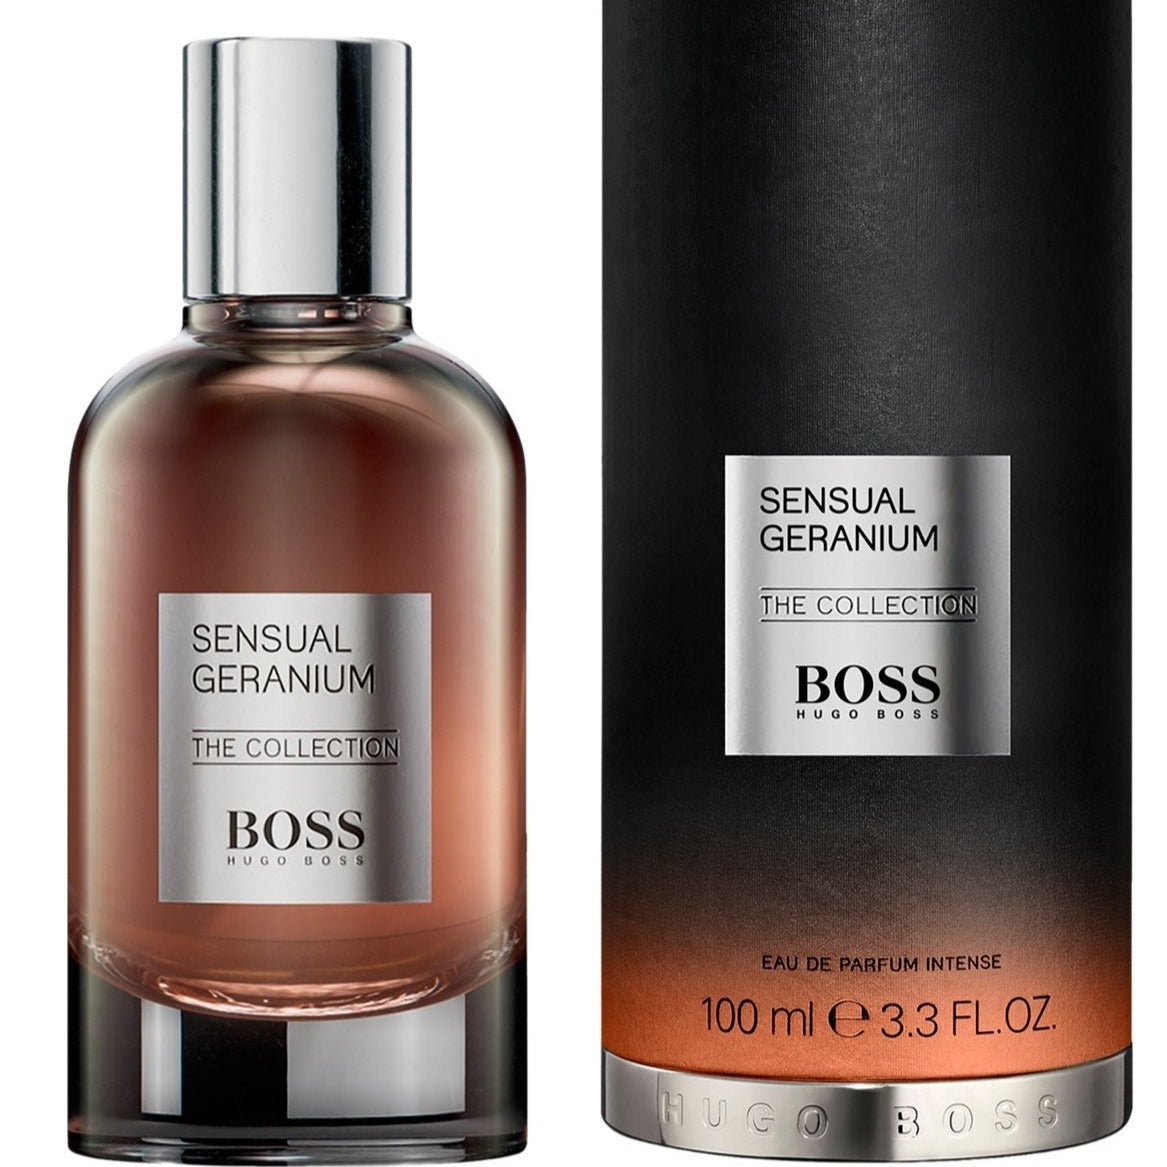 Hugo Boss Boss The Collection Sensual Geranium EDP Intense | My Perfume Shop Australia